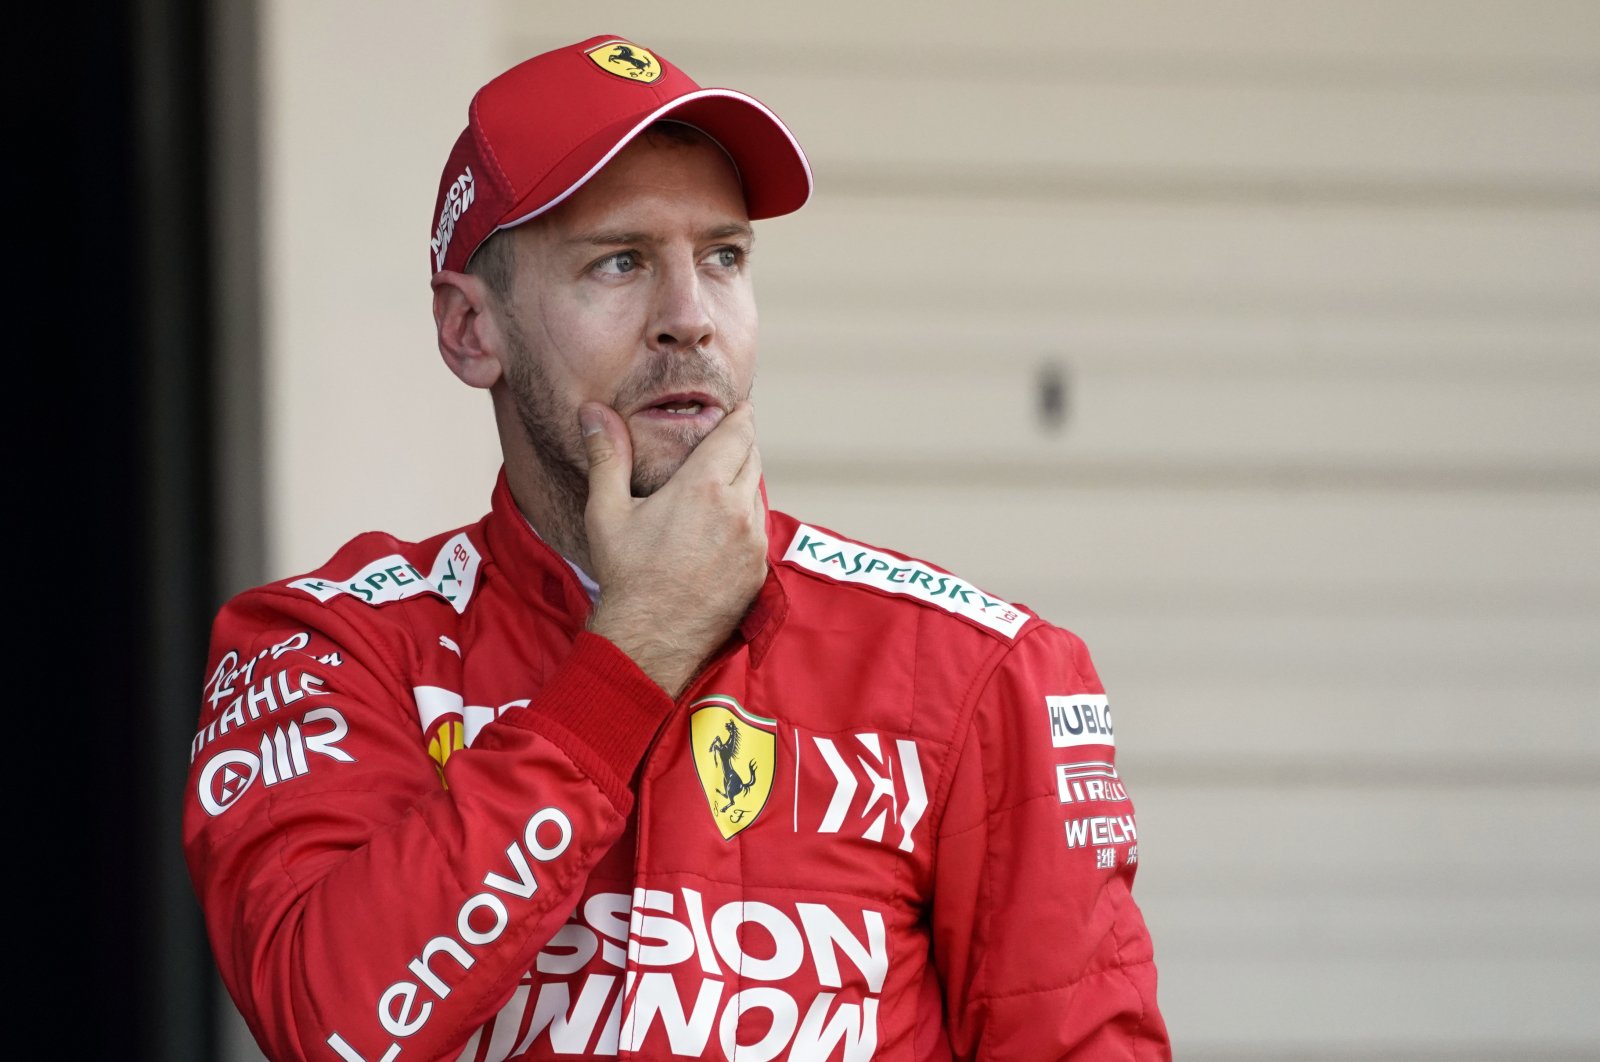 Sebastian Vettel reacts after a race in Suzuka, Japan, Oct. 13, 2019. (EPA Photo)